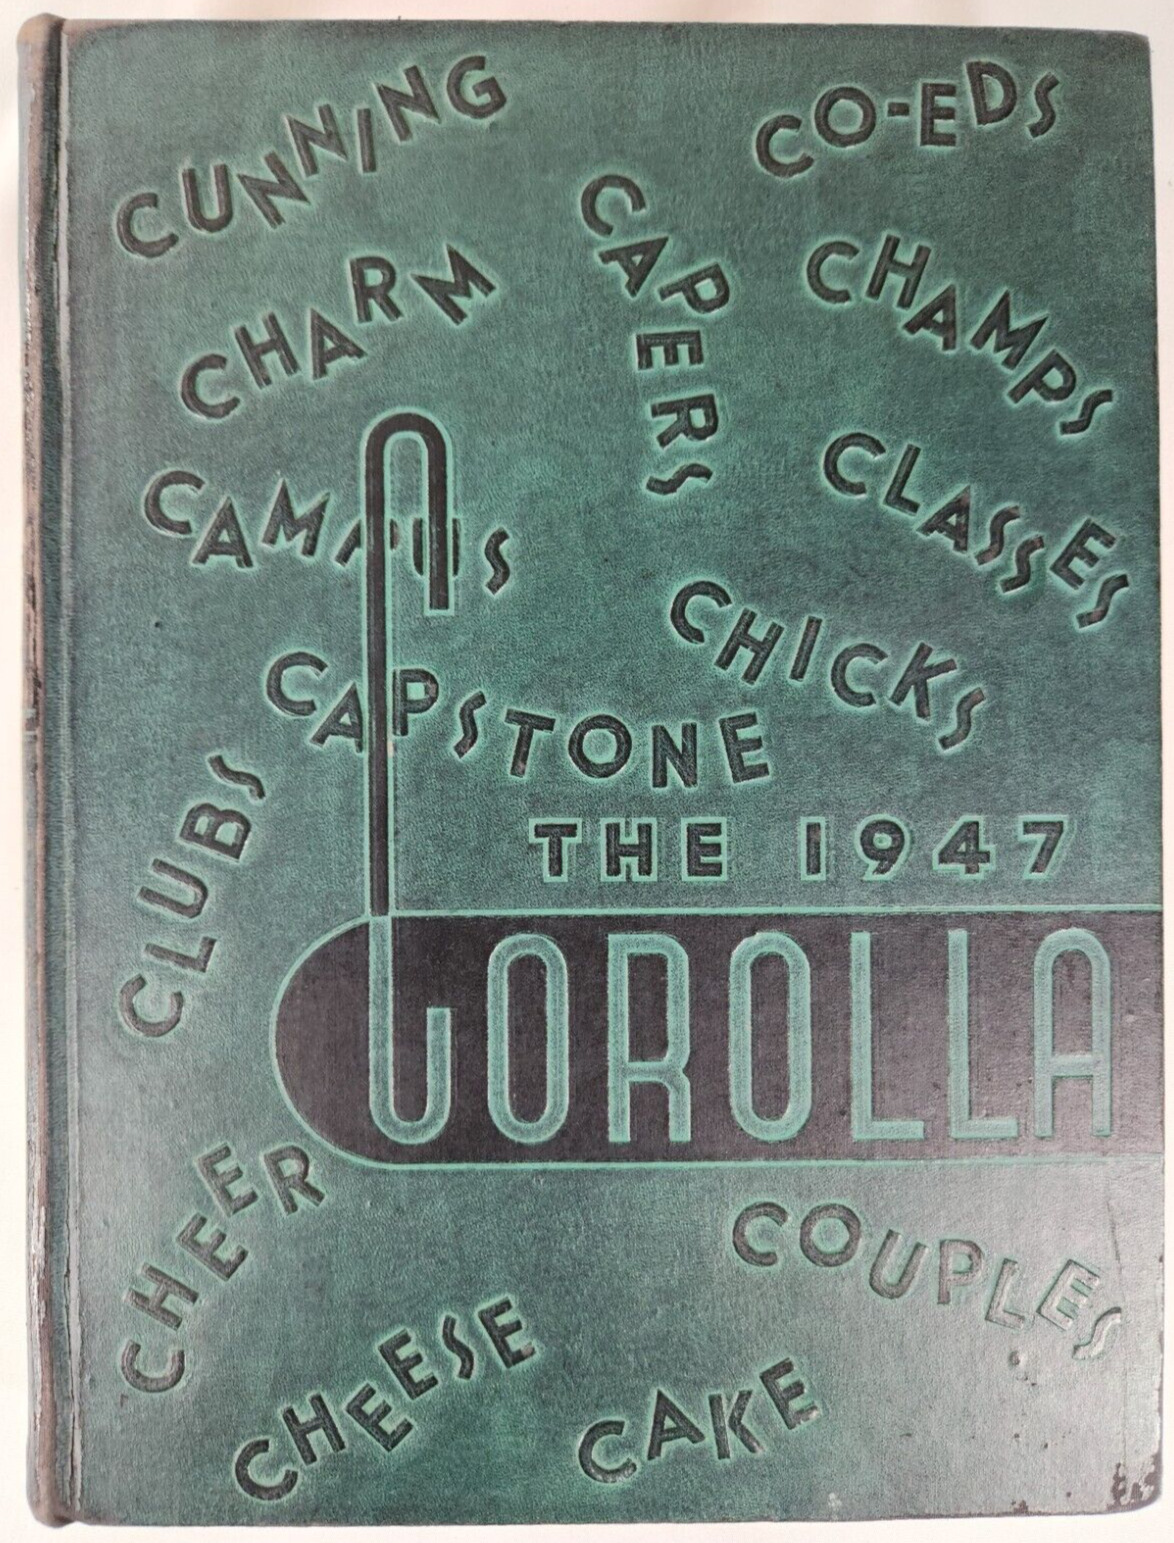 1947 Corolla University Alabama Nelle Harper Lee To Kill A Mockingbird Yearbook